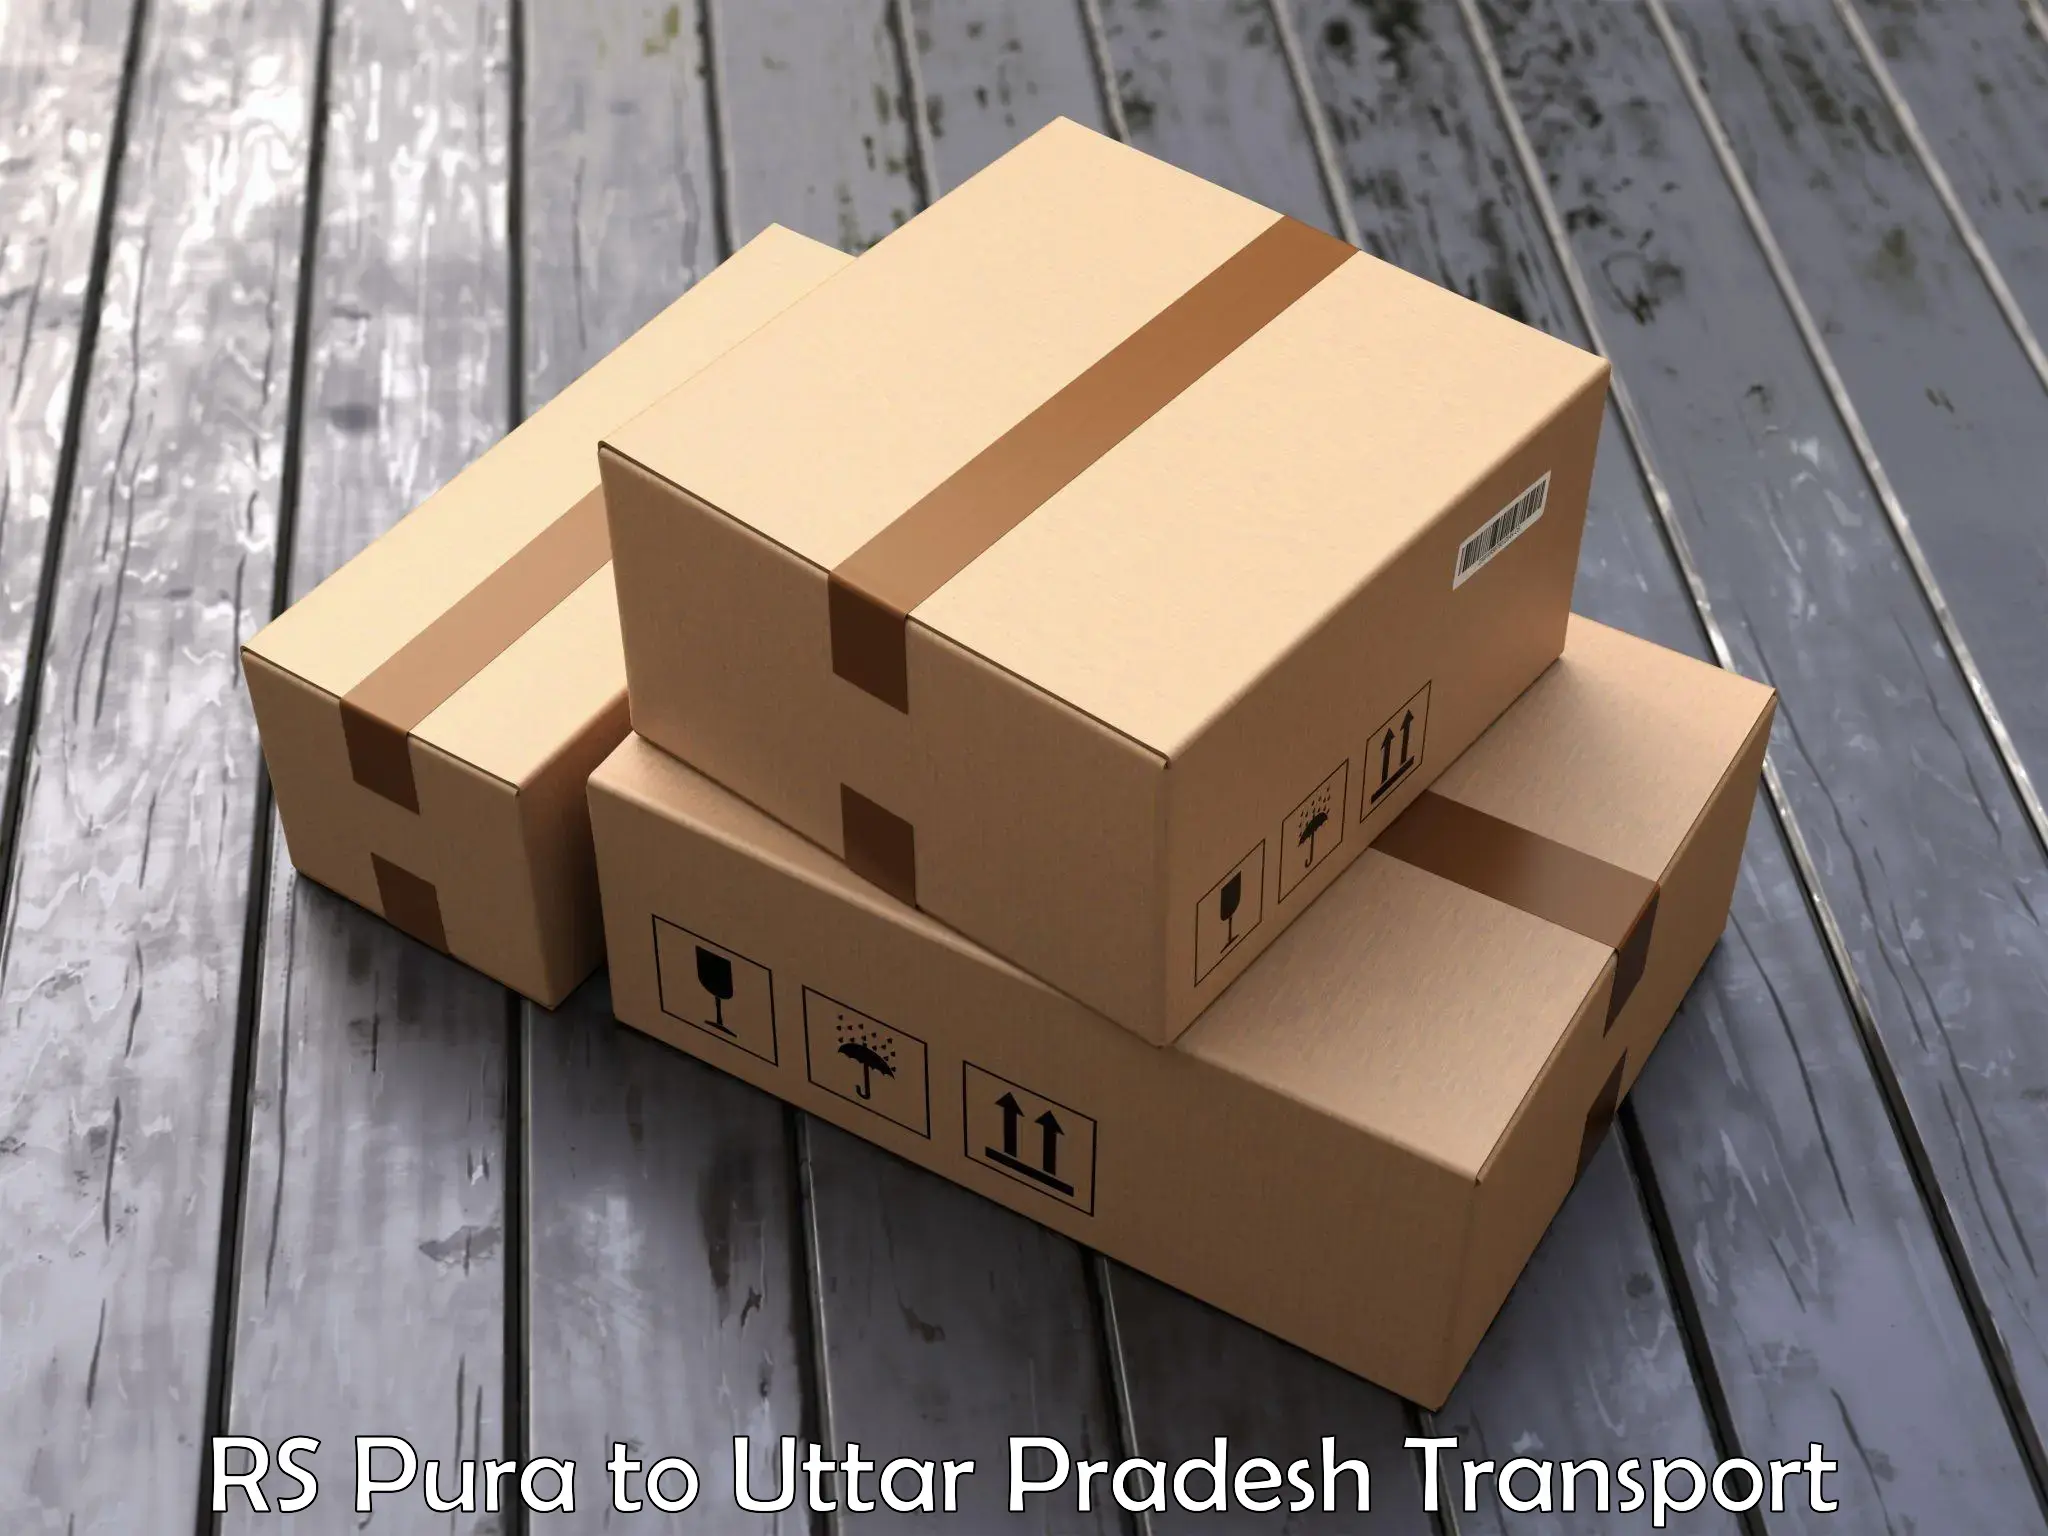 Lorry transport service RS Pura to Uttar Pradesh